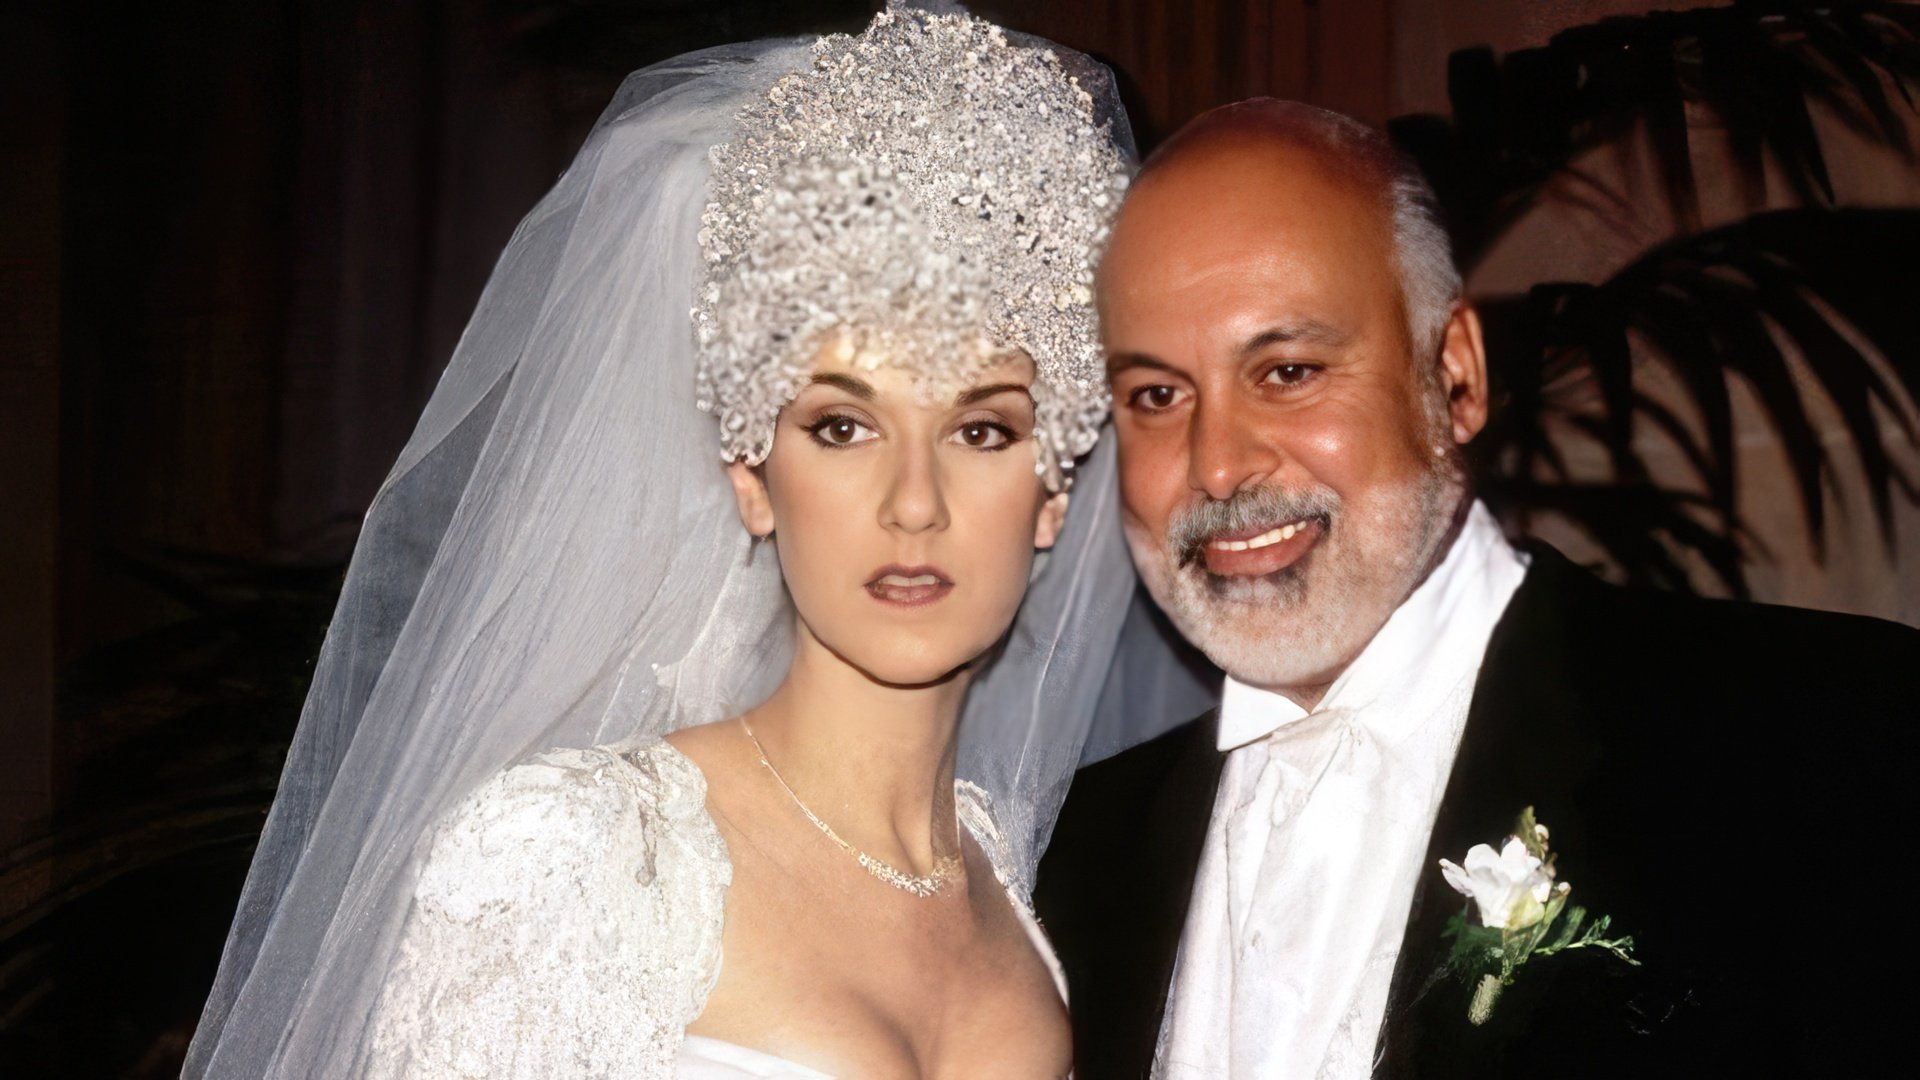 Celine Dion and Rene Angelil's wedding